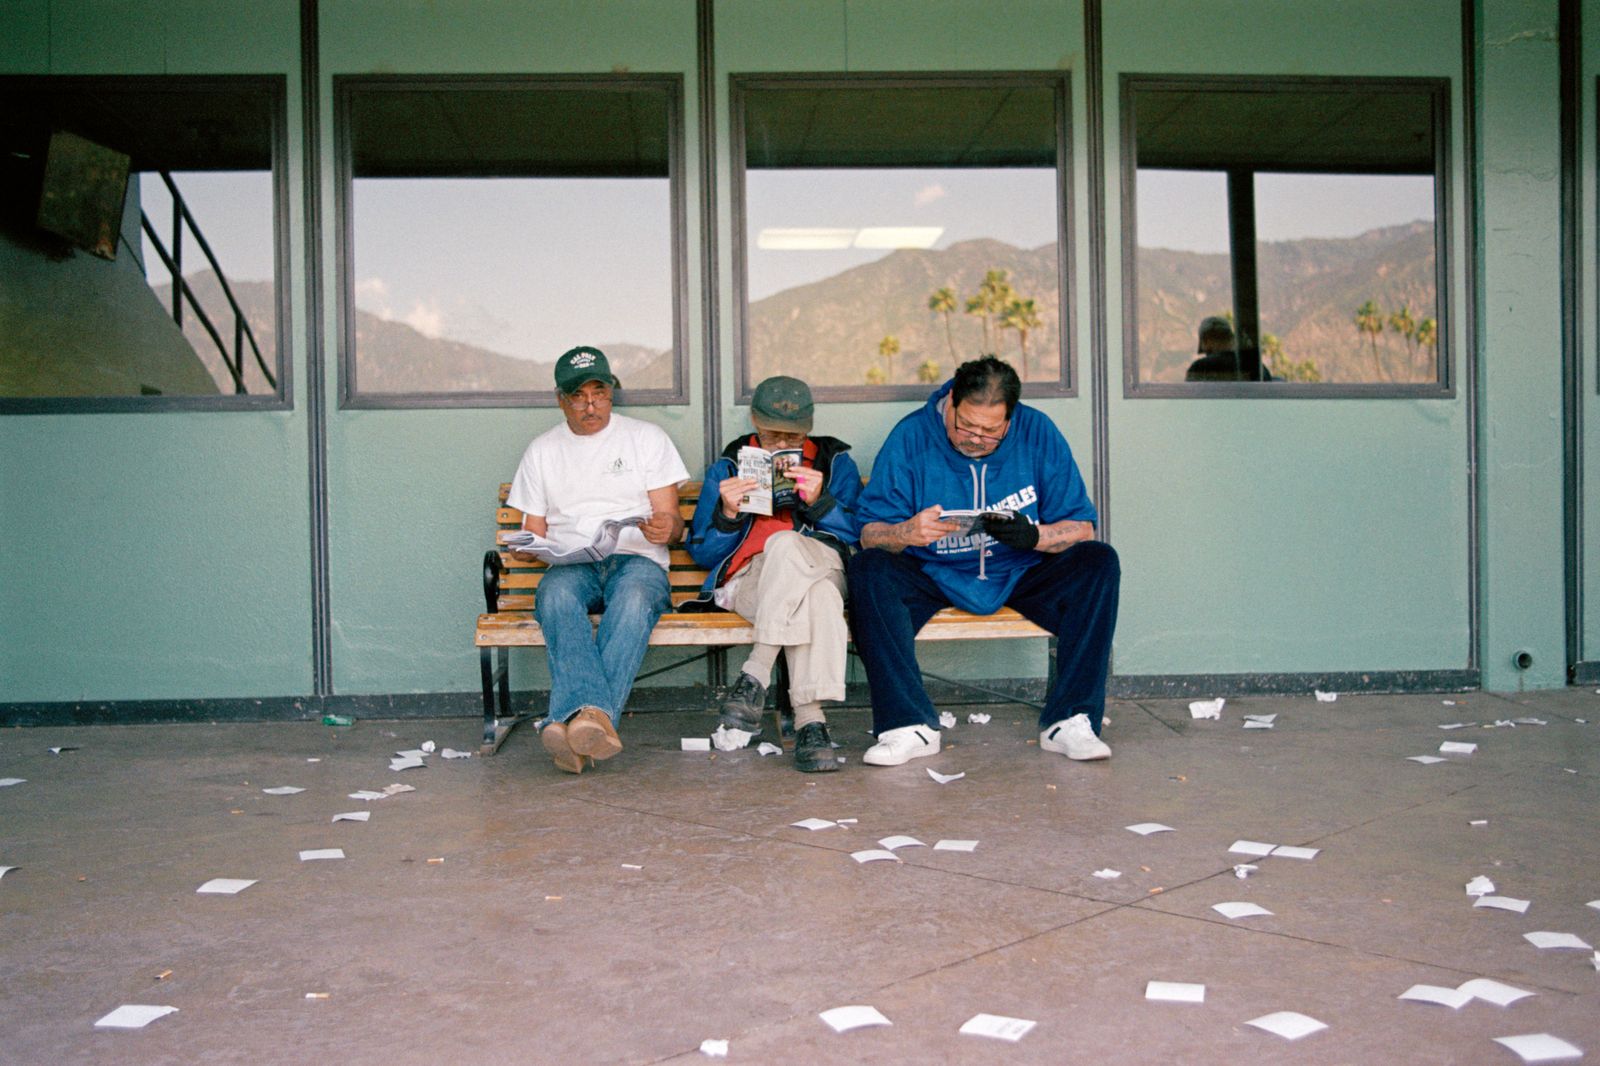 © Louise Amelie - "Horse Race" Players in Santa Anita Park.